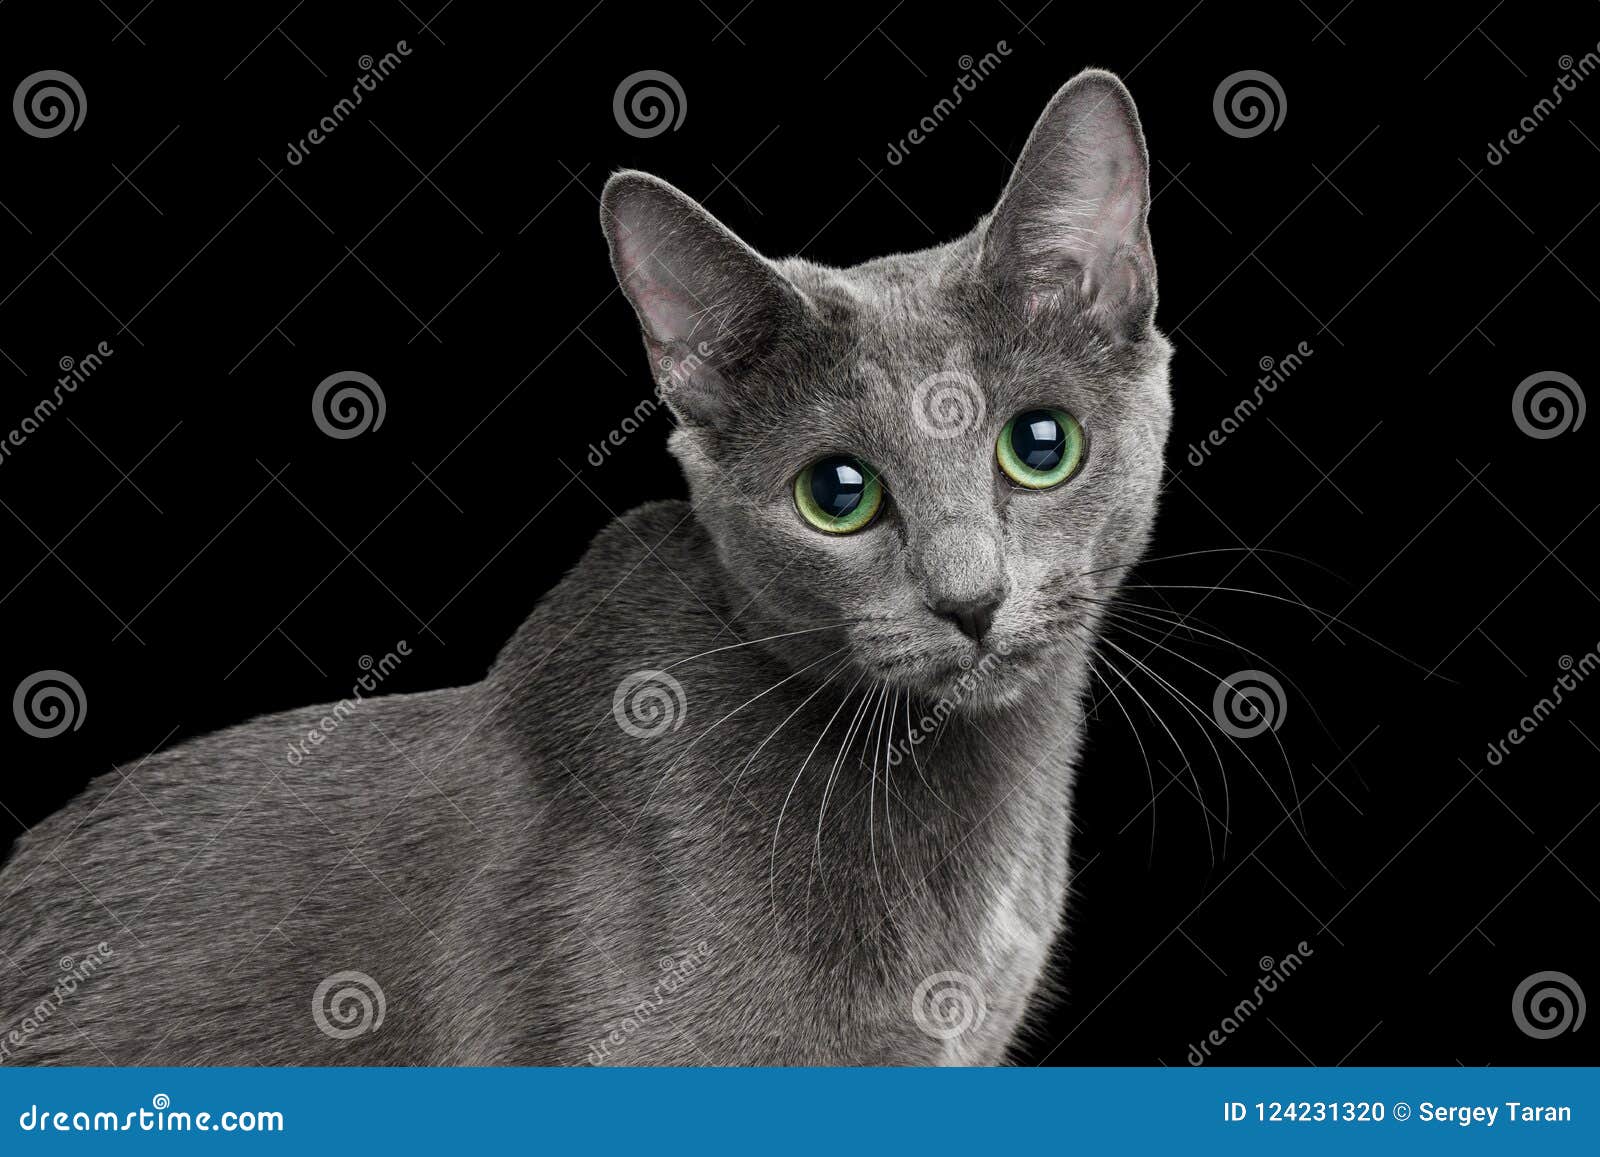 amazing russian blue cat on black background